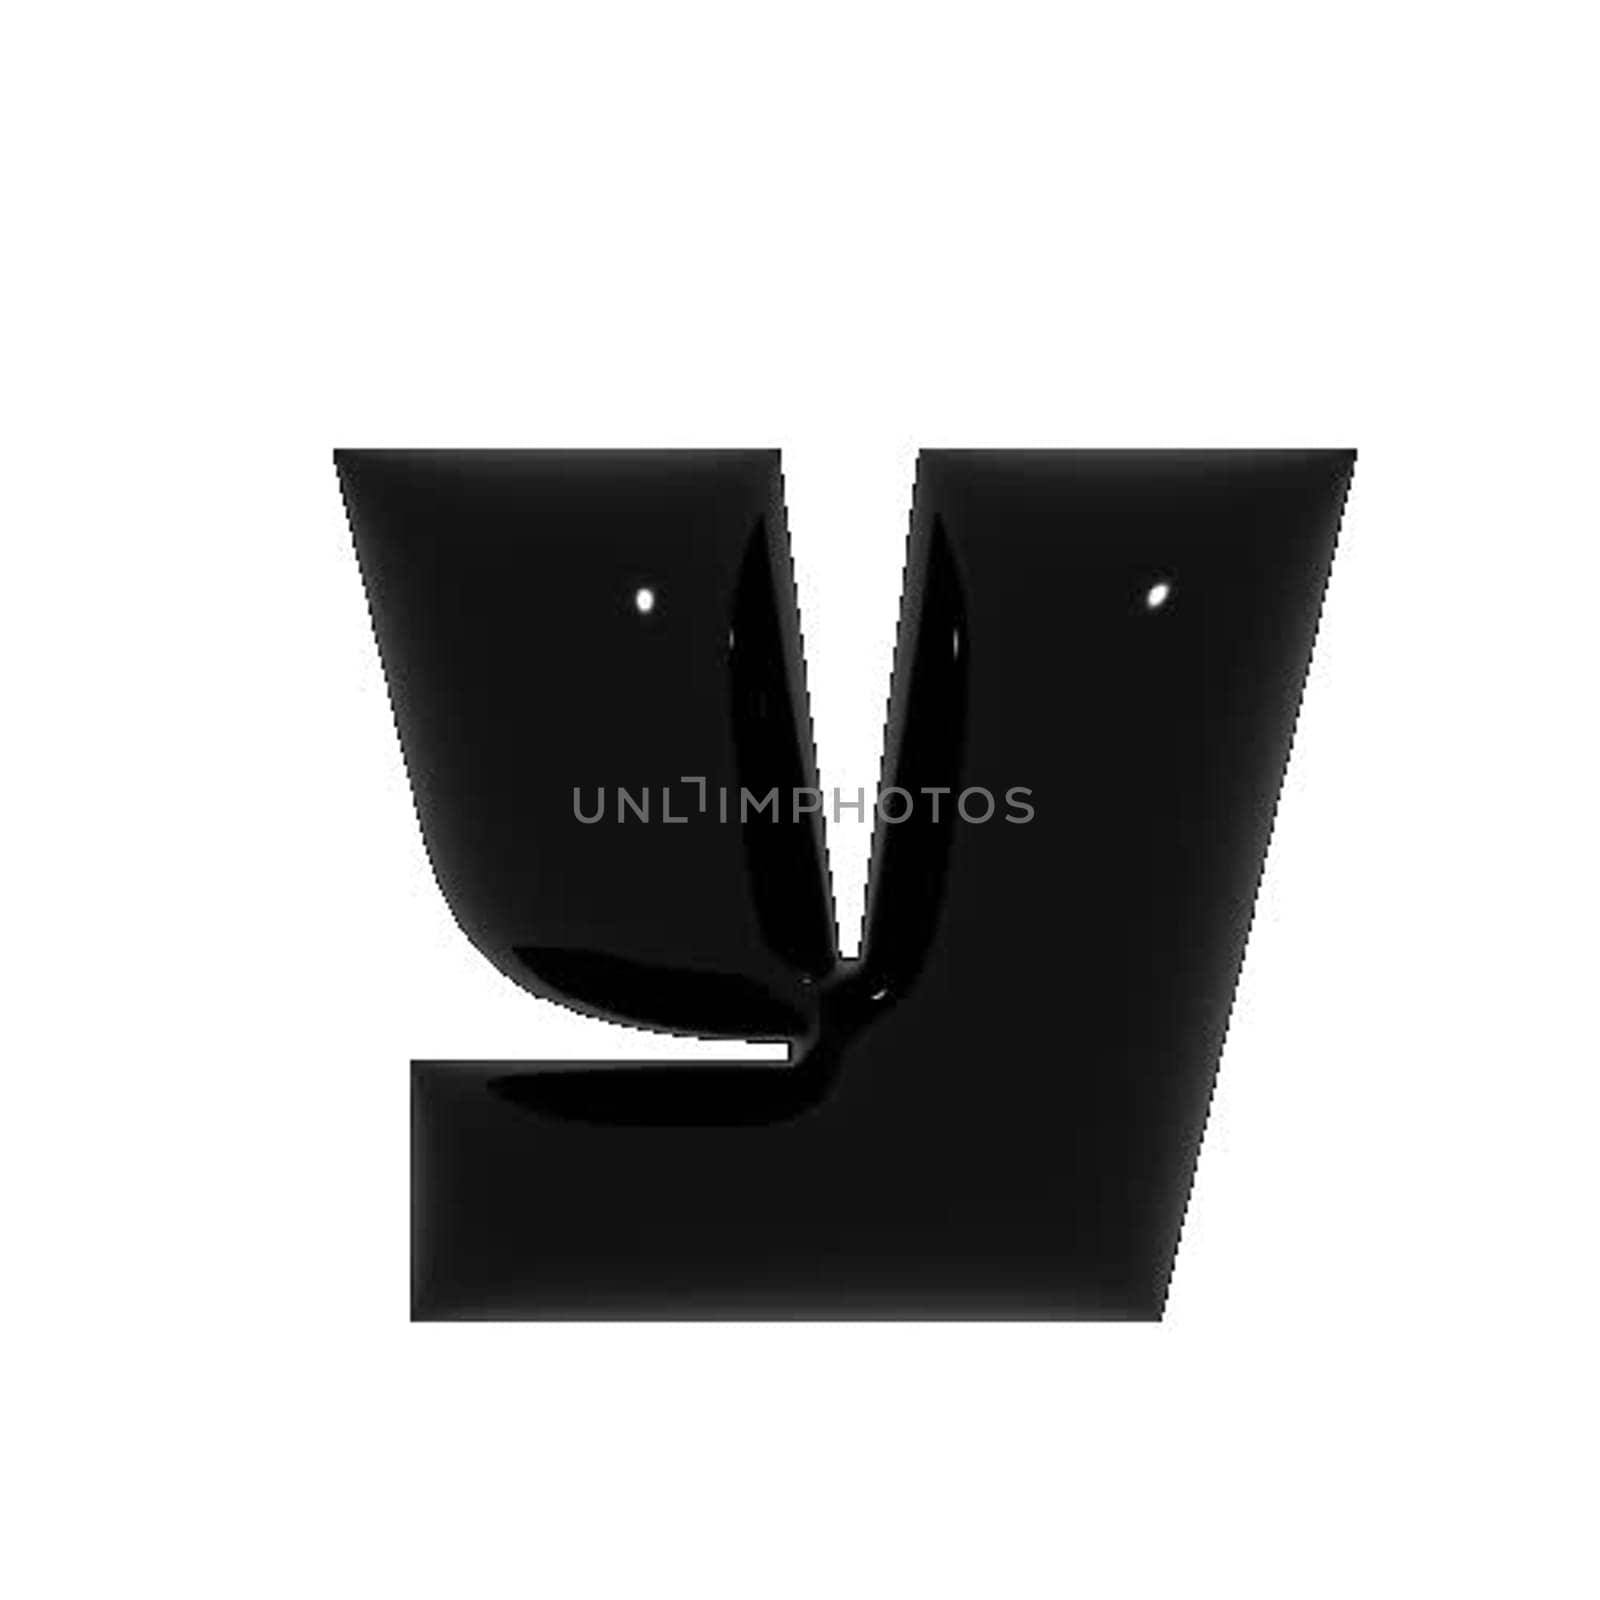 Black metal shiny reflective letter Y 3D illustration by Dustick